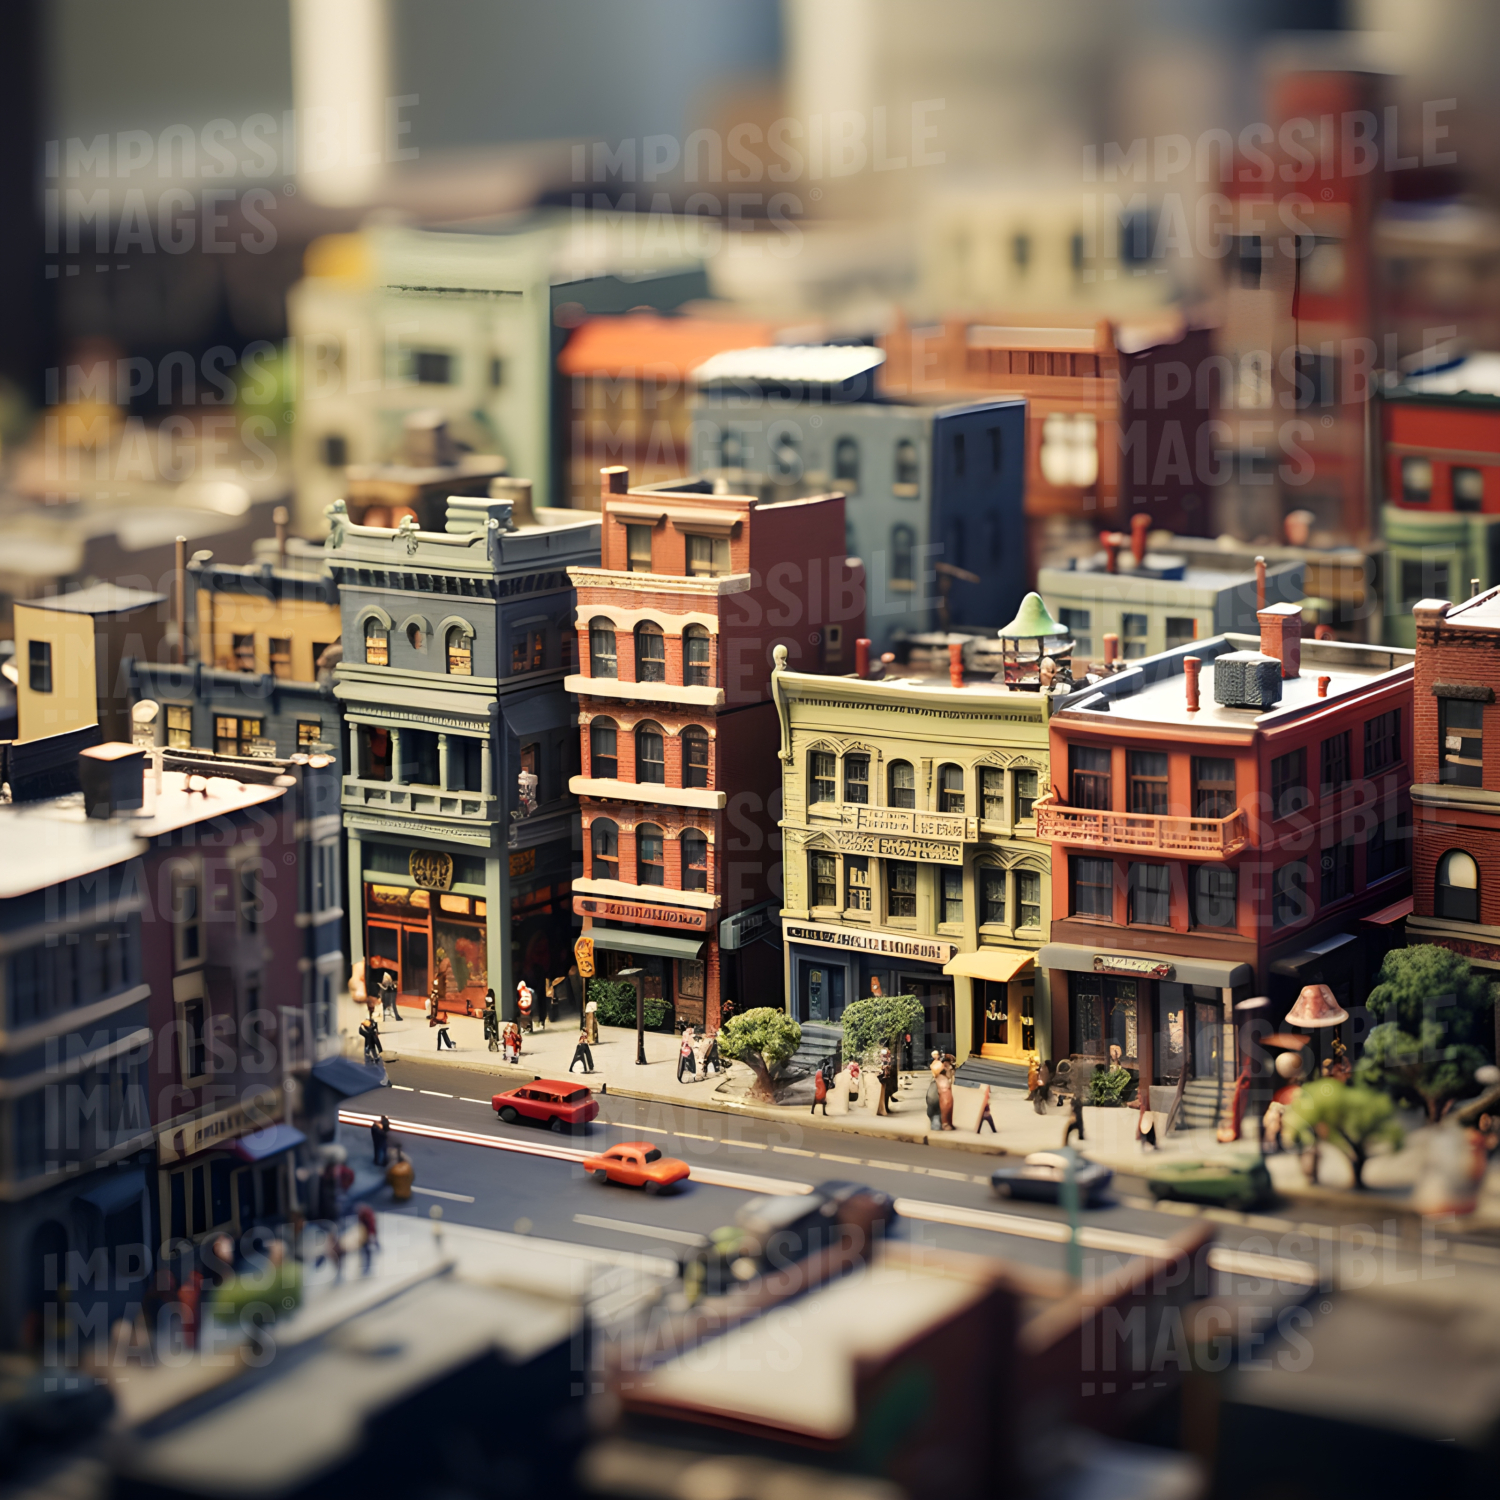 Model of a busy mid twentieth century city street